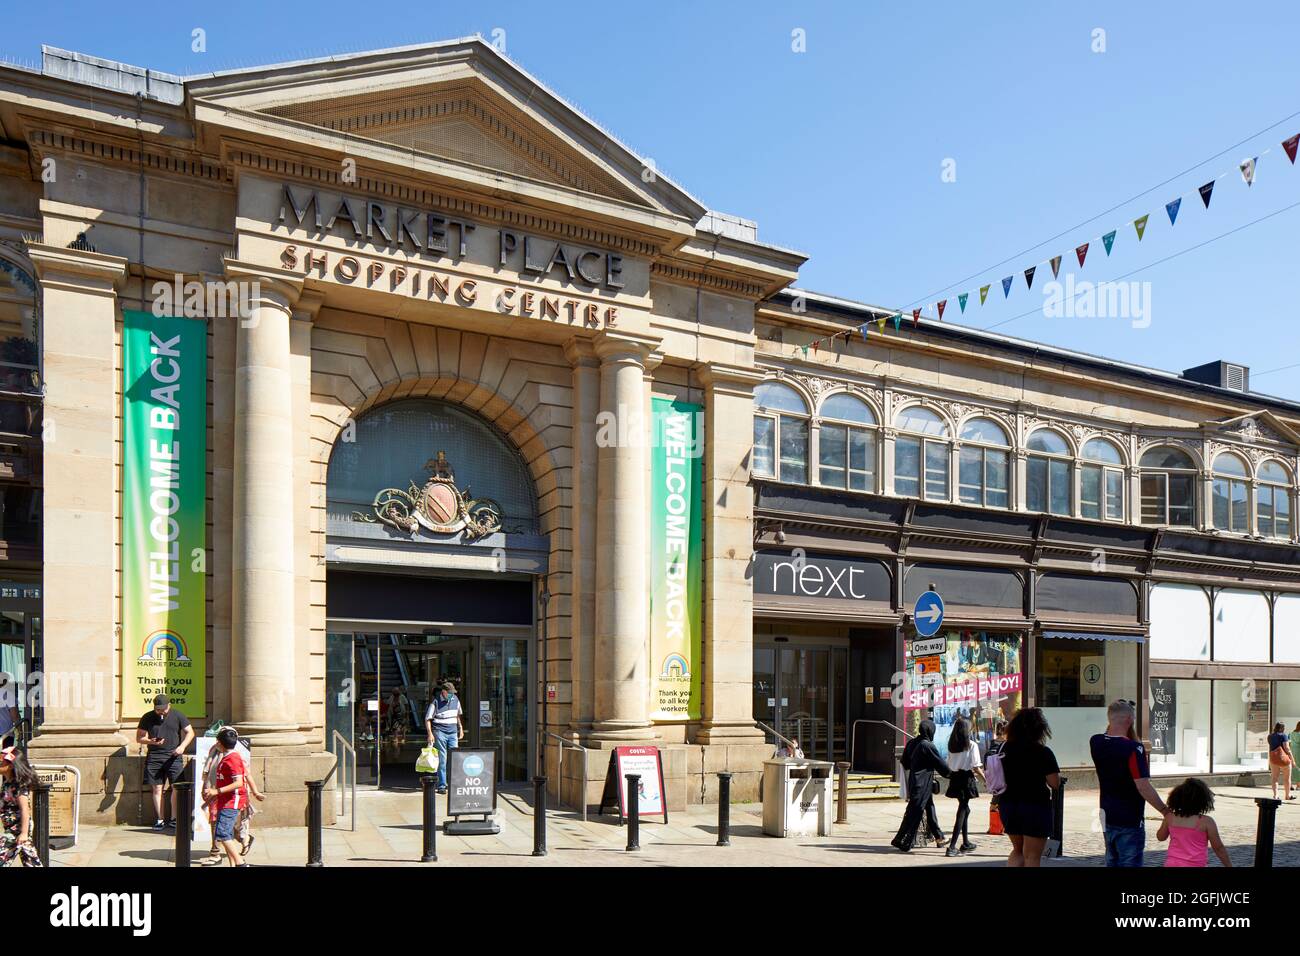 Town Centre Bolton, Lancashire Market Place shopping centre mall Stock Photo